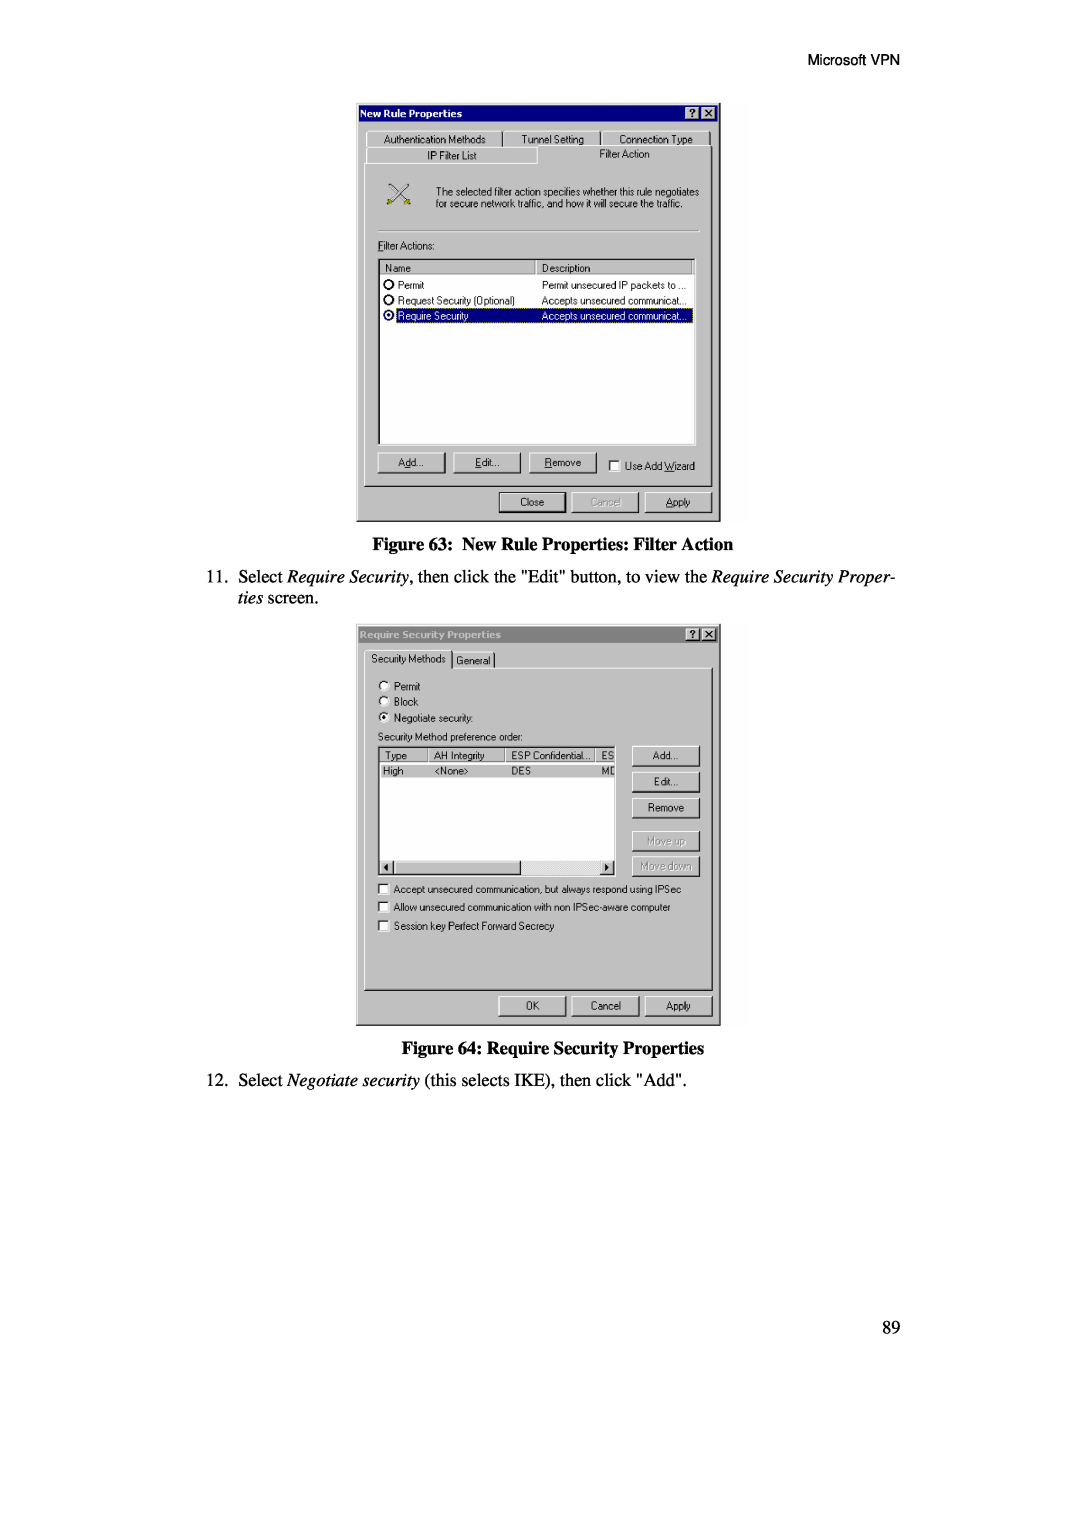 TRENDnet BRV204 manual New Rule Properties Filter Action, Require Security Properties, Microsoft VPN 